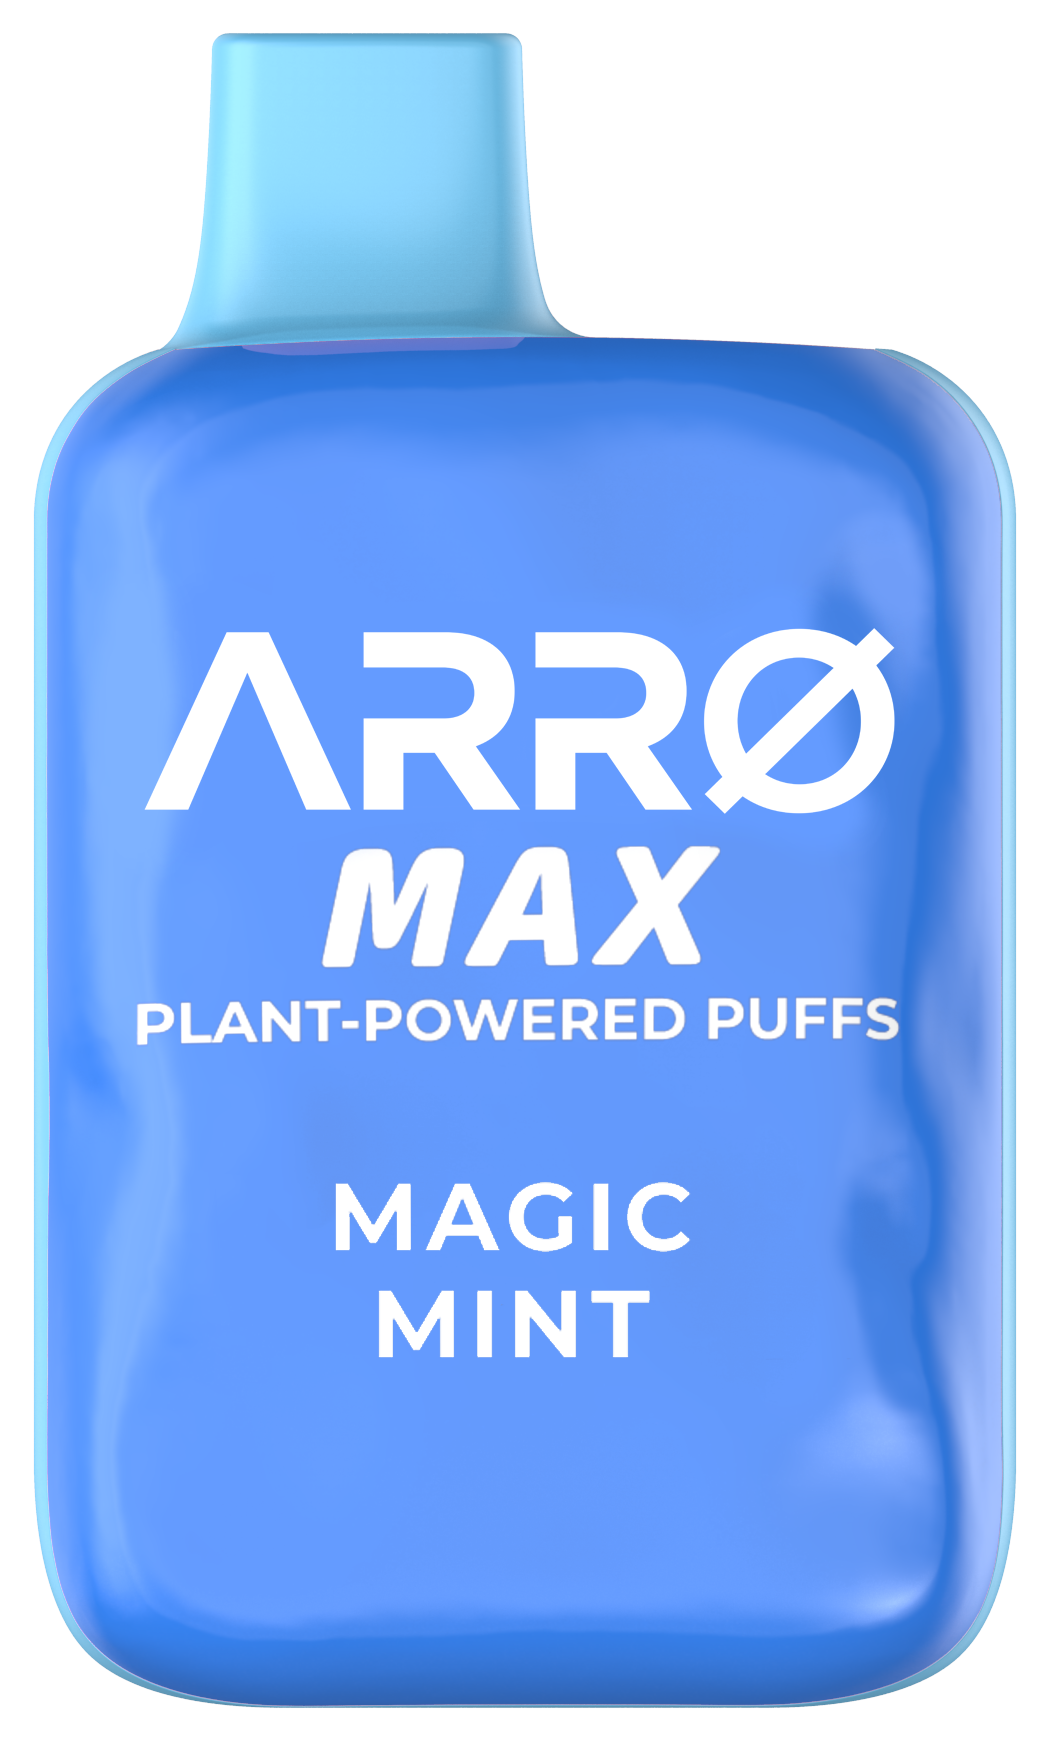 ARRØ MAX –  Magic Mint (5,000 Puffs) Plant Powered Aromatherapy Device, Single Pack